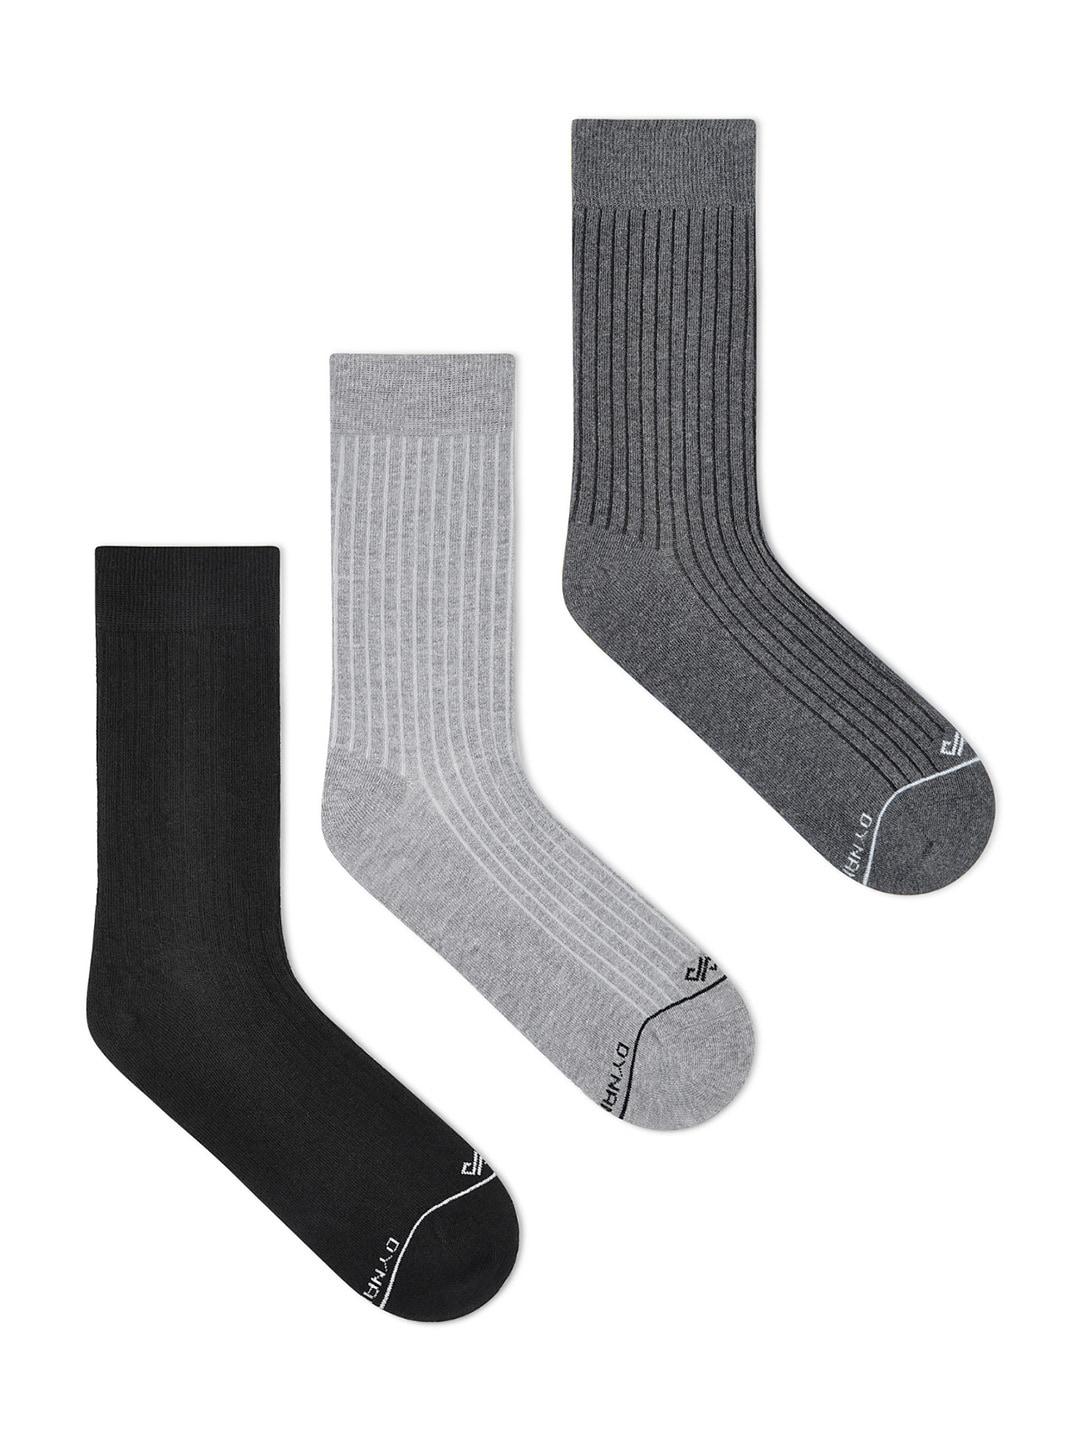 dynamocks unisex pack of 3 solid calf length socks